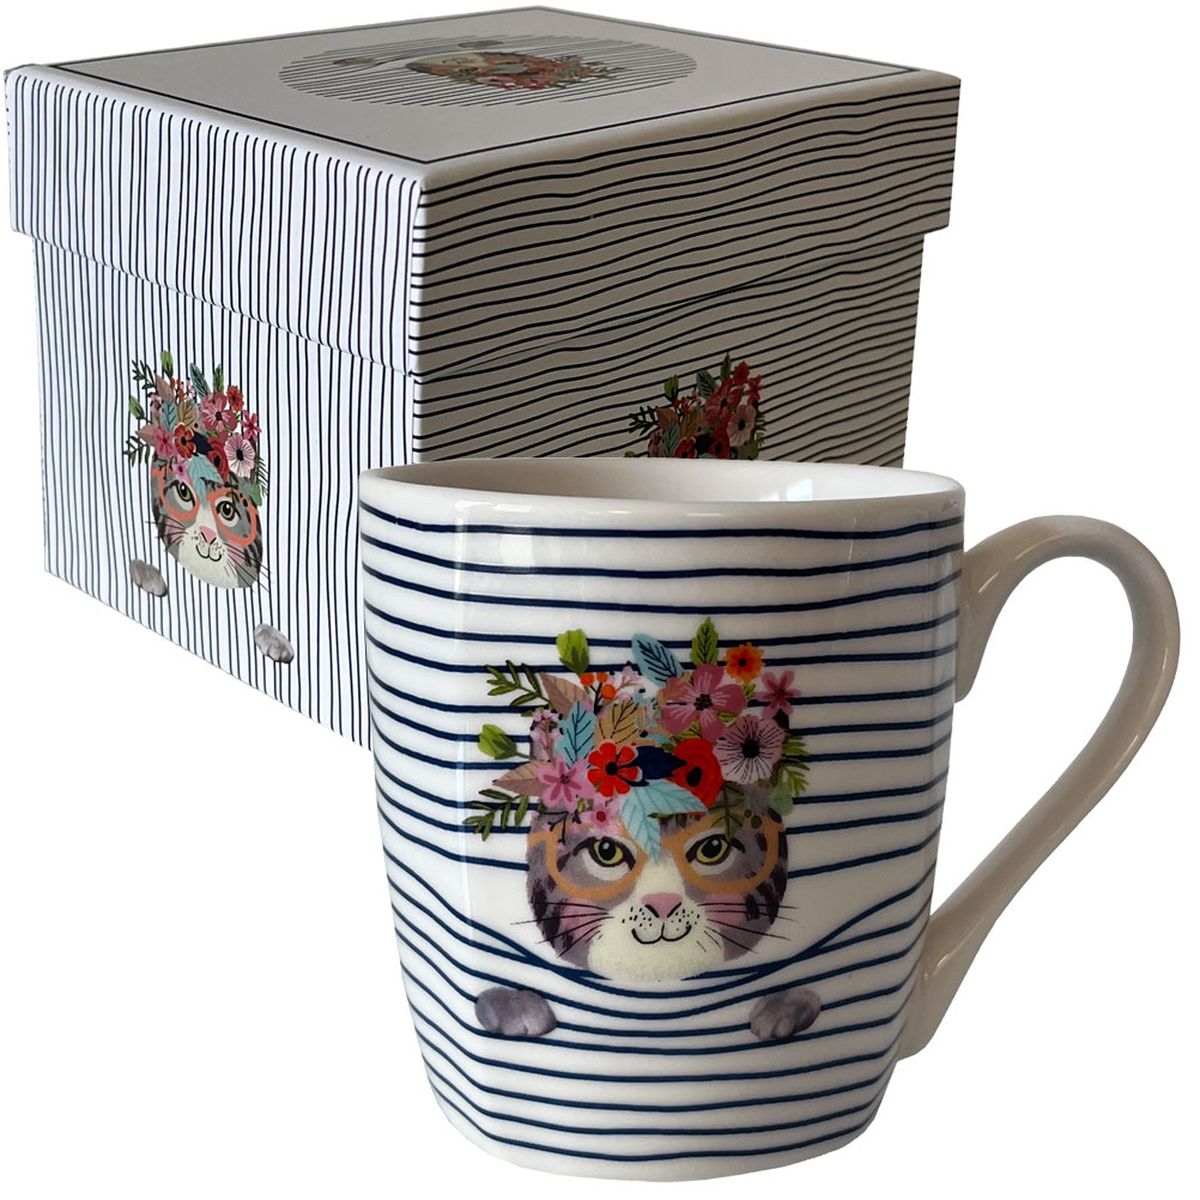 White ceramic striped cat mug in gift box